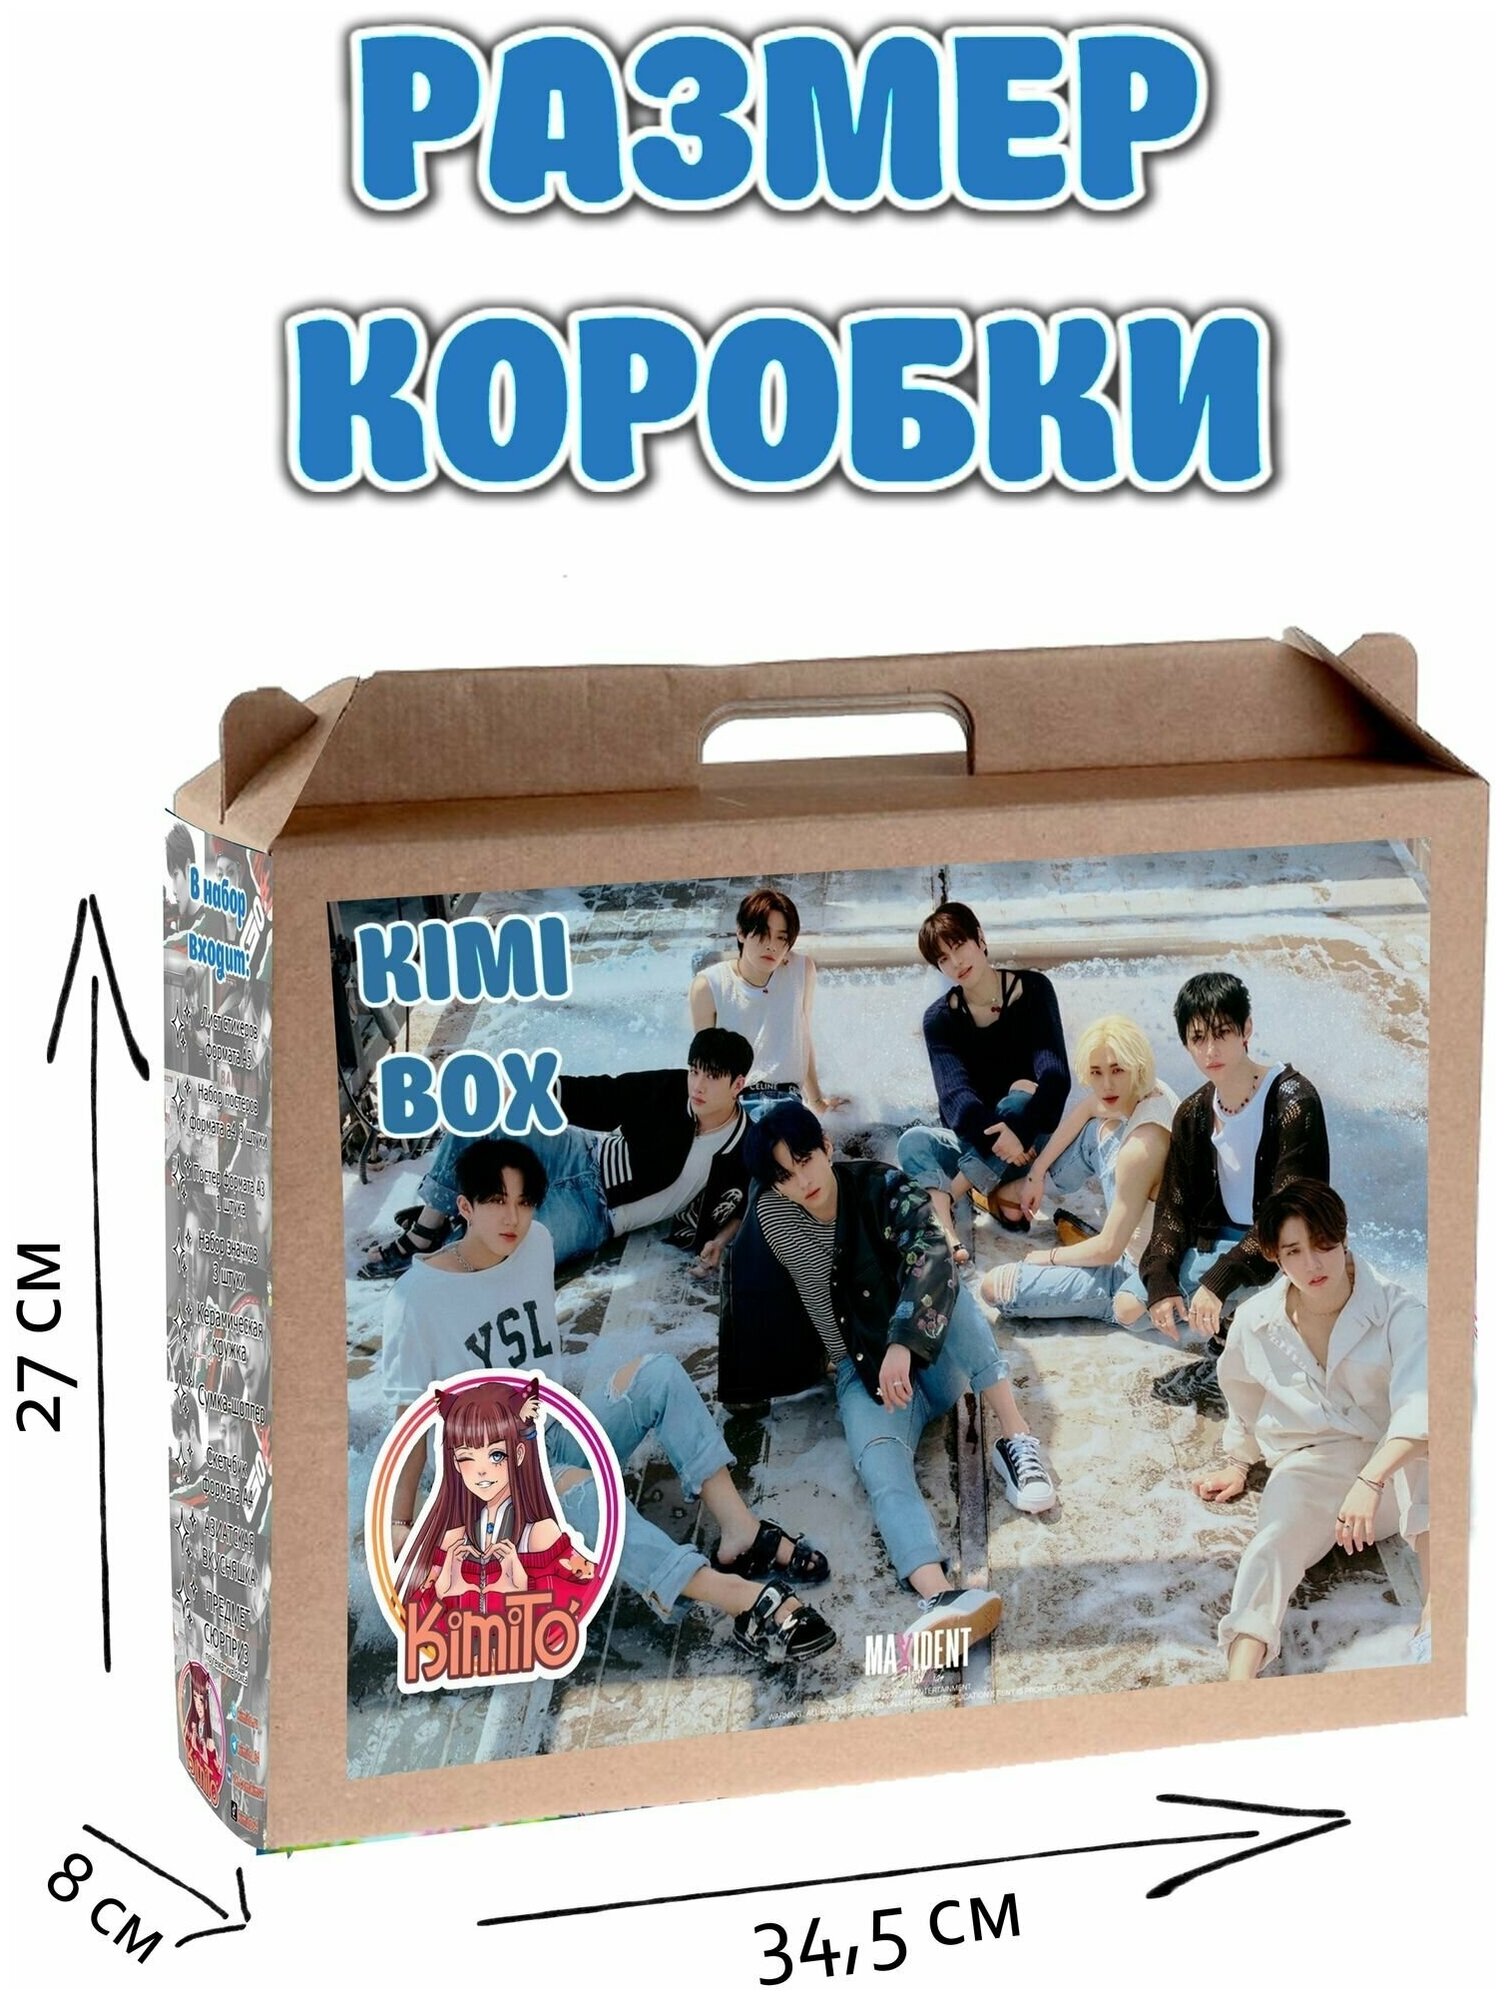 KIMI BOX Stray Kids - подарочный чемоданчик / К-поп бокс Stray Kids , KImiTo